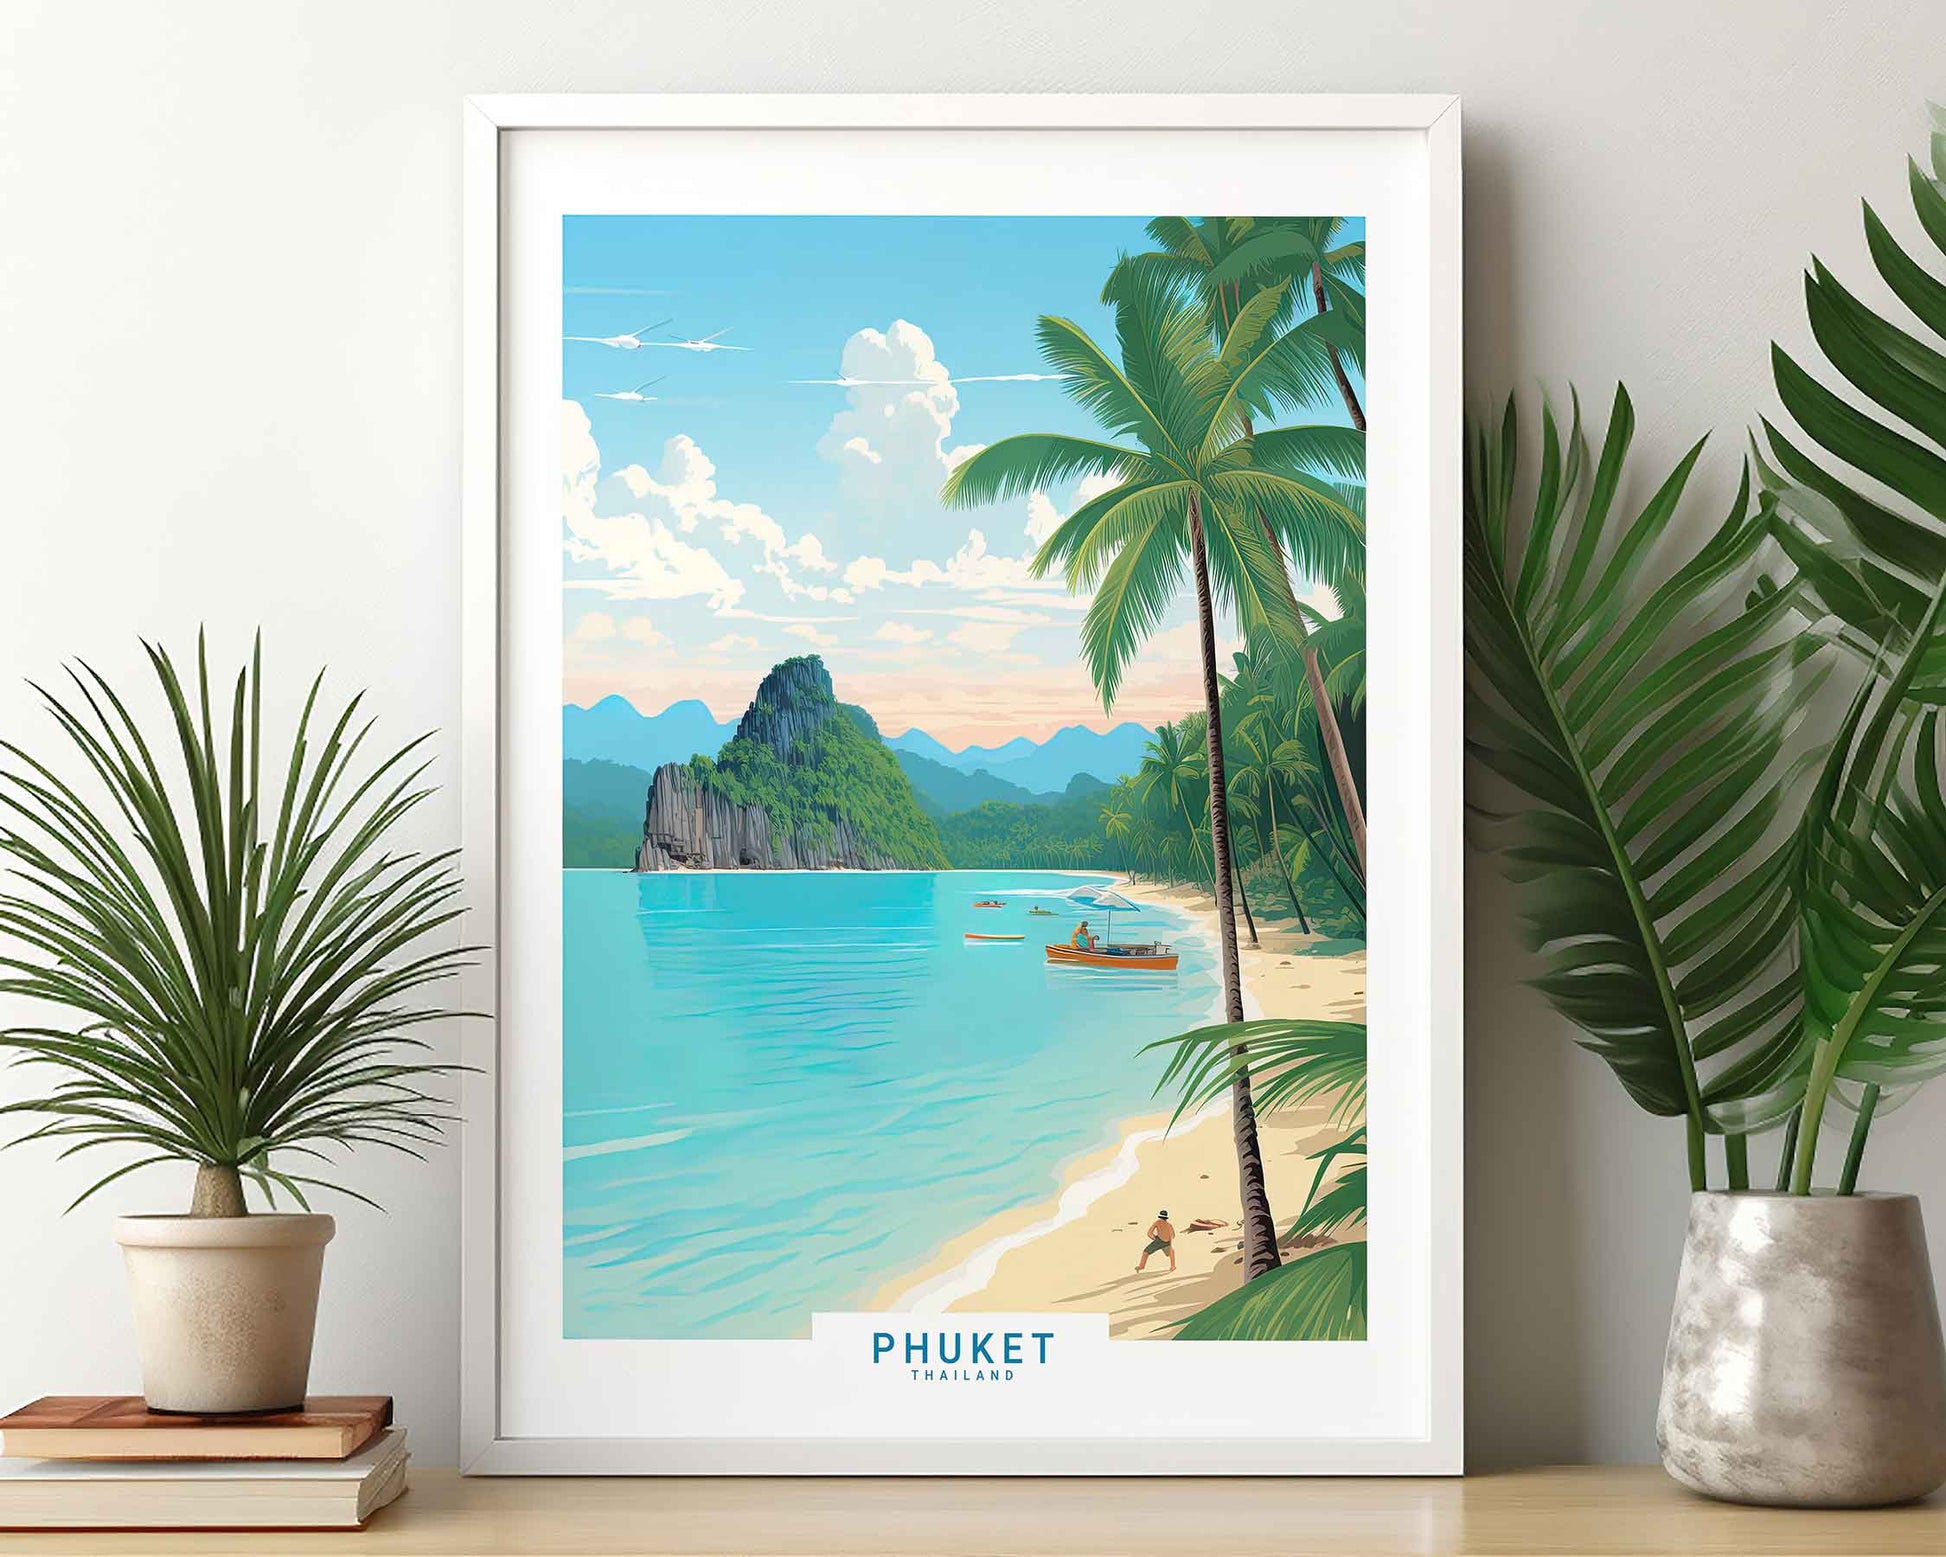 Framed Image of Phuket Thailand Travel Poster Prints Wall Art Illustration